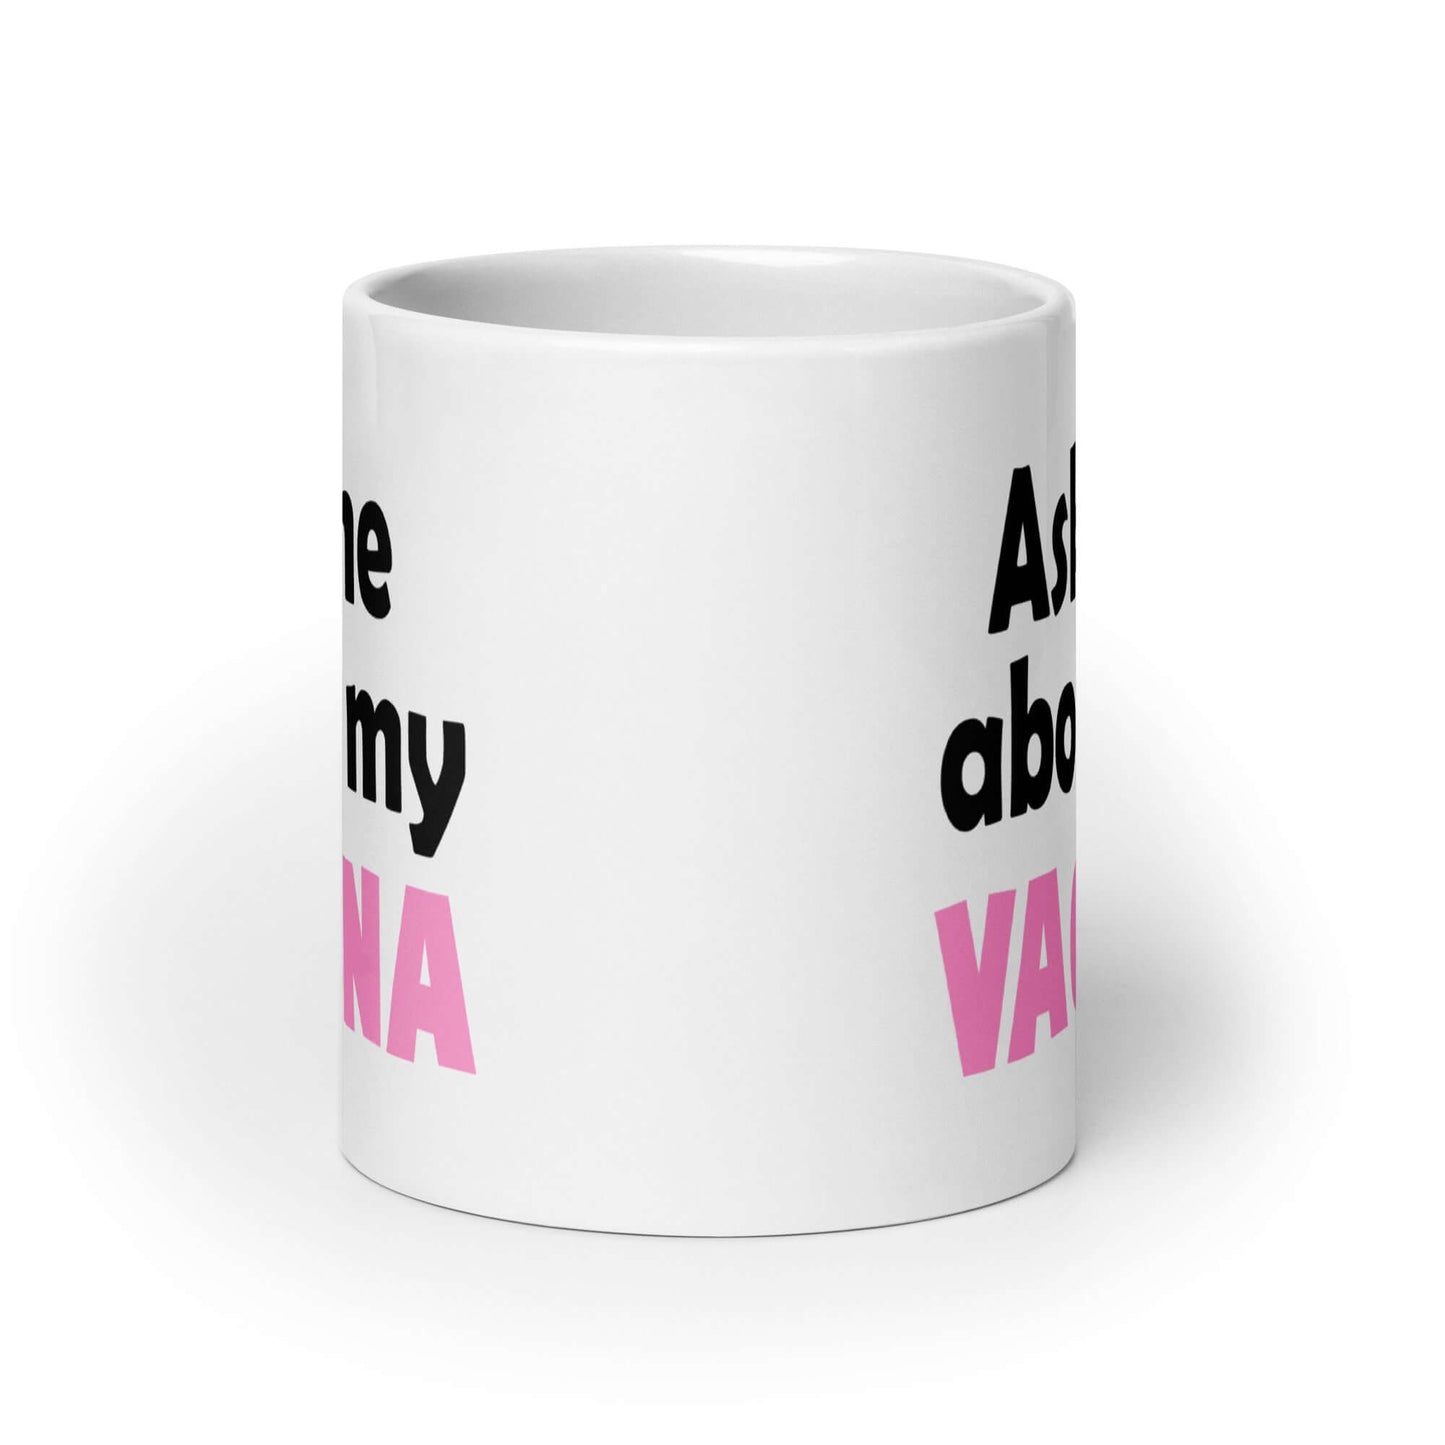 Ask me about my vagina girl power mug